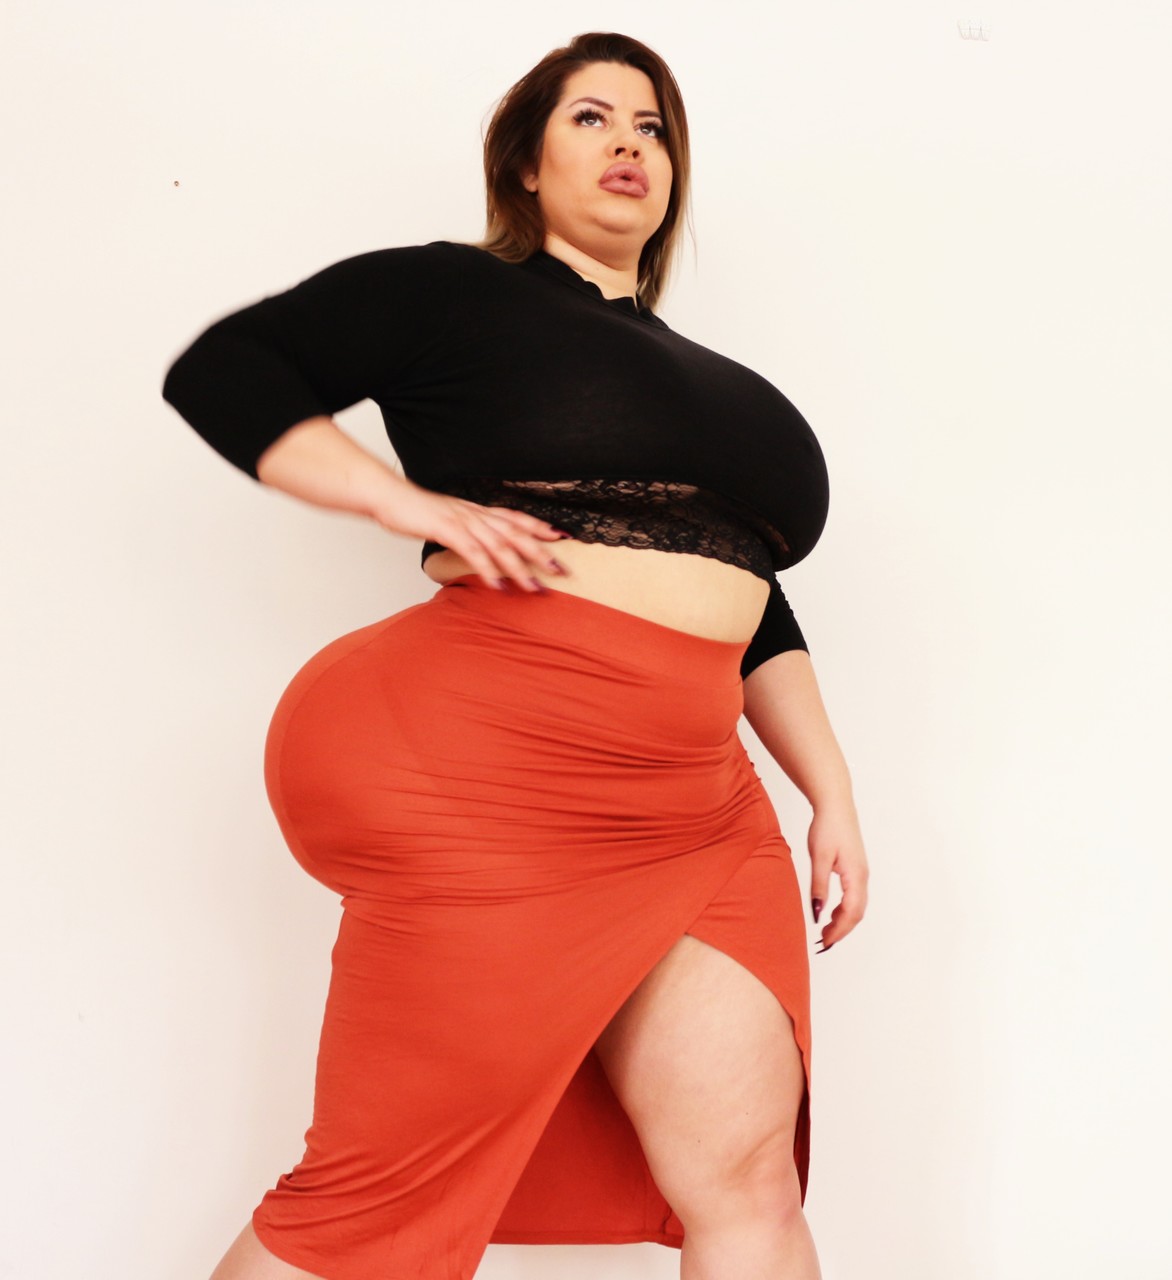 Stunning MILF fatty Natasha Crown flaunting her very big ass in a tight skirt ポルノ写真 #423816654 | Natasha Crown Pics, Natasha Crown, BBW, モバイルポルノ